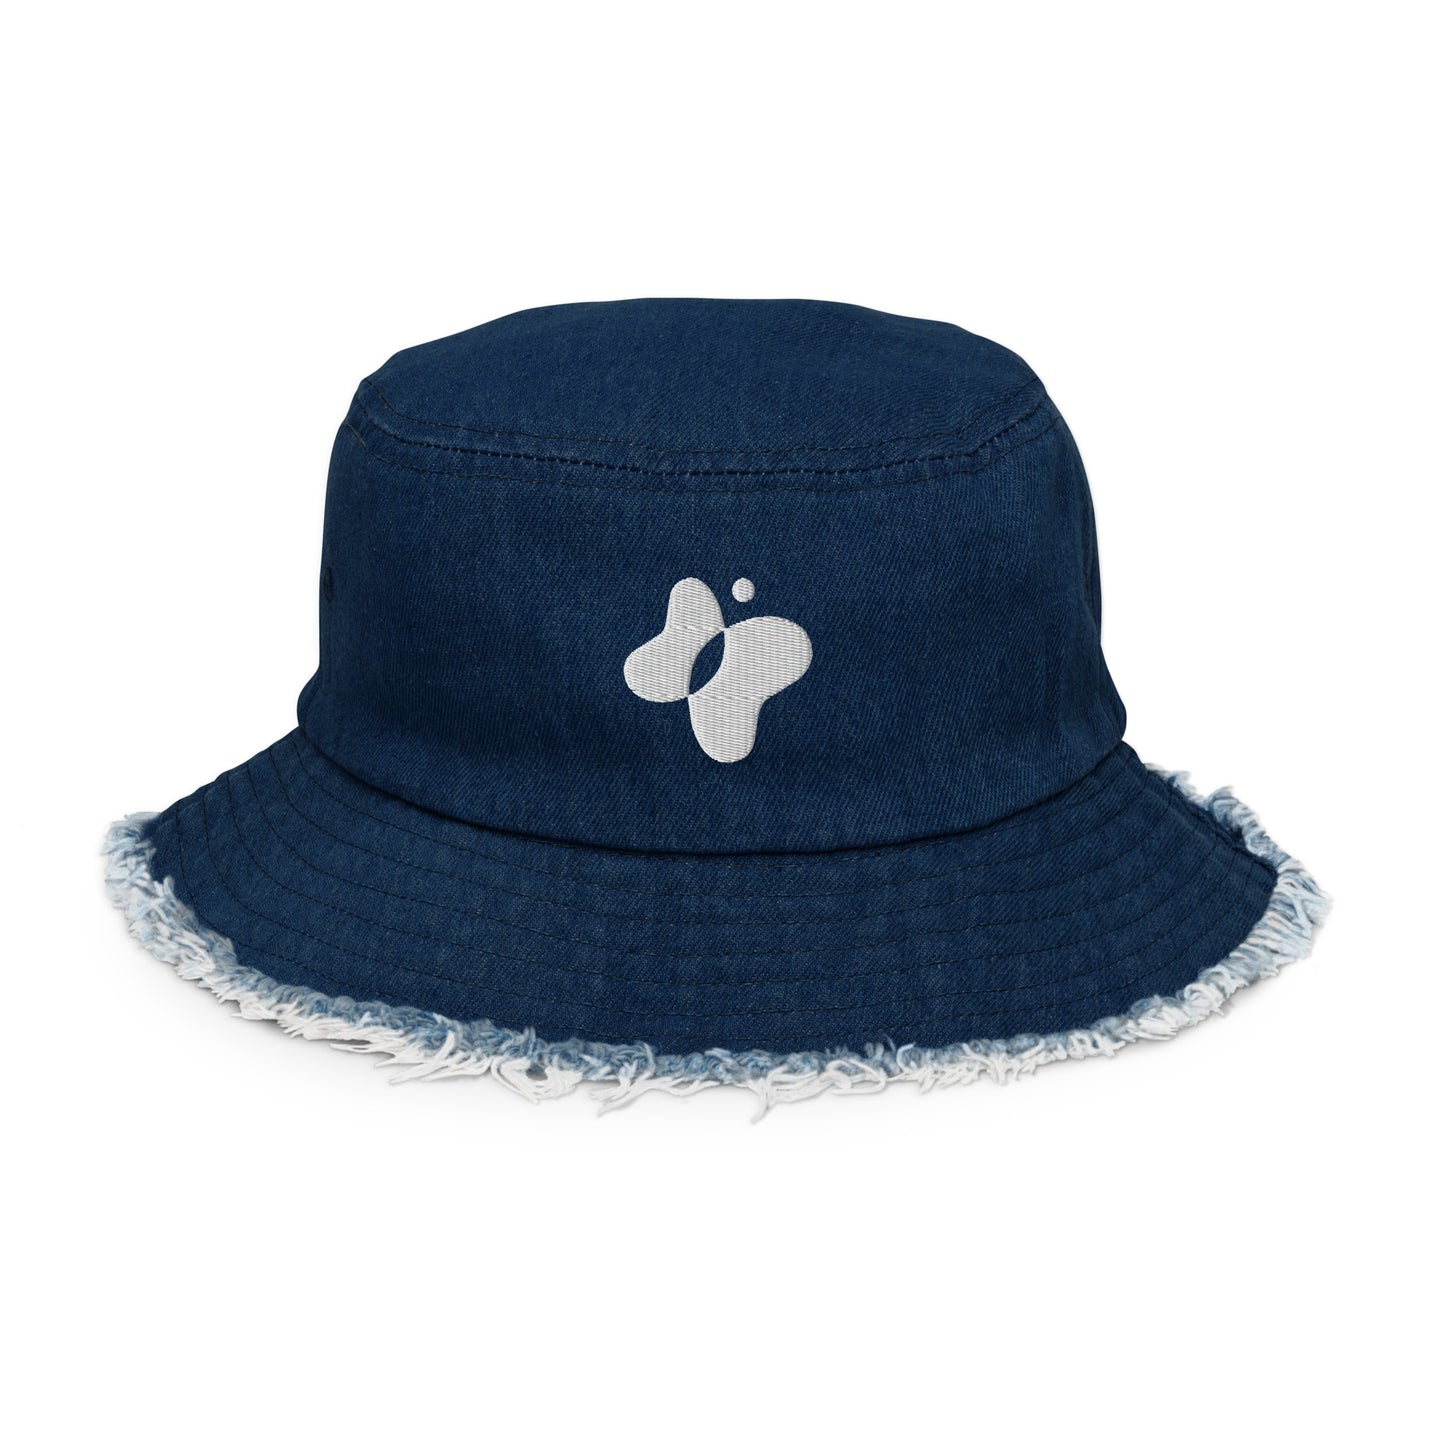 Malomo Butterfly Logo Distressed Denim Bucket Hat